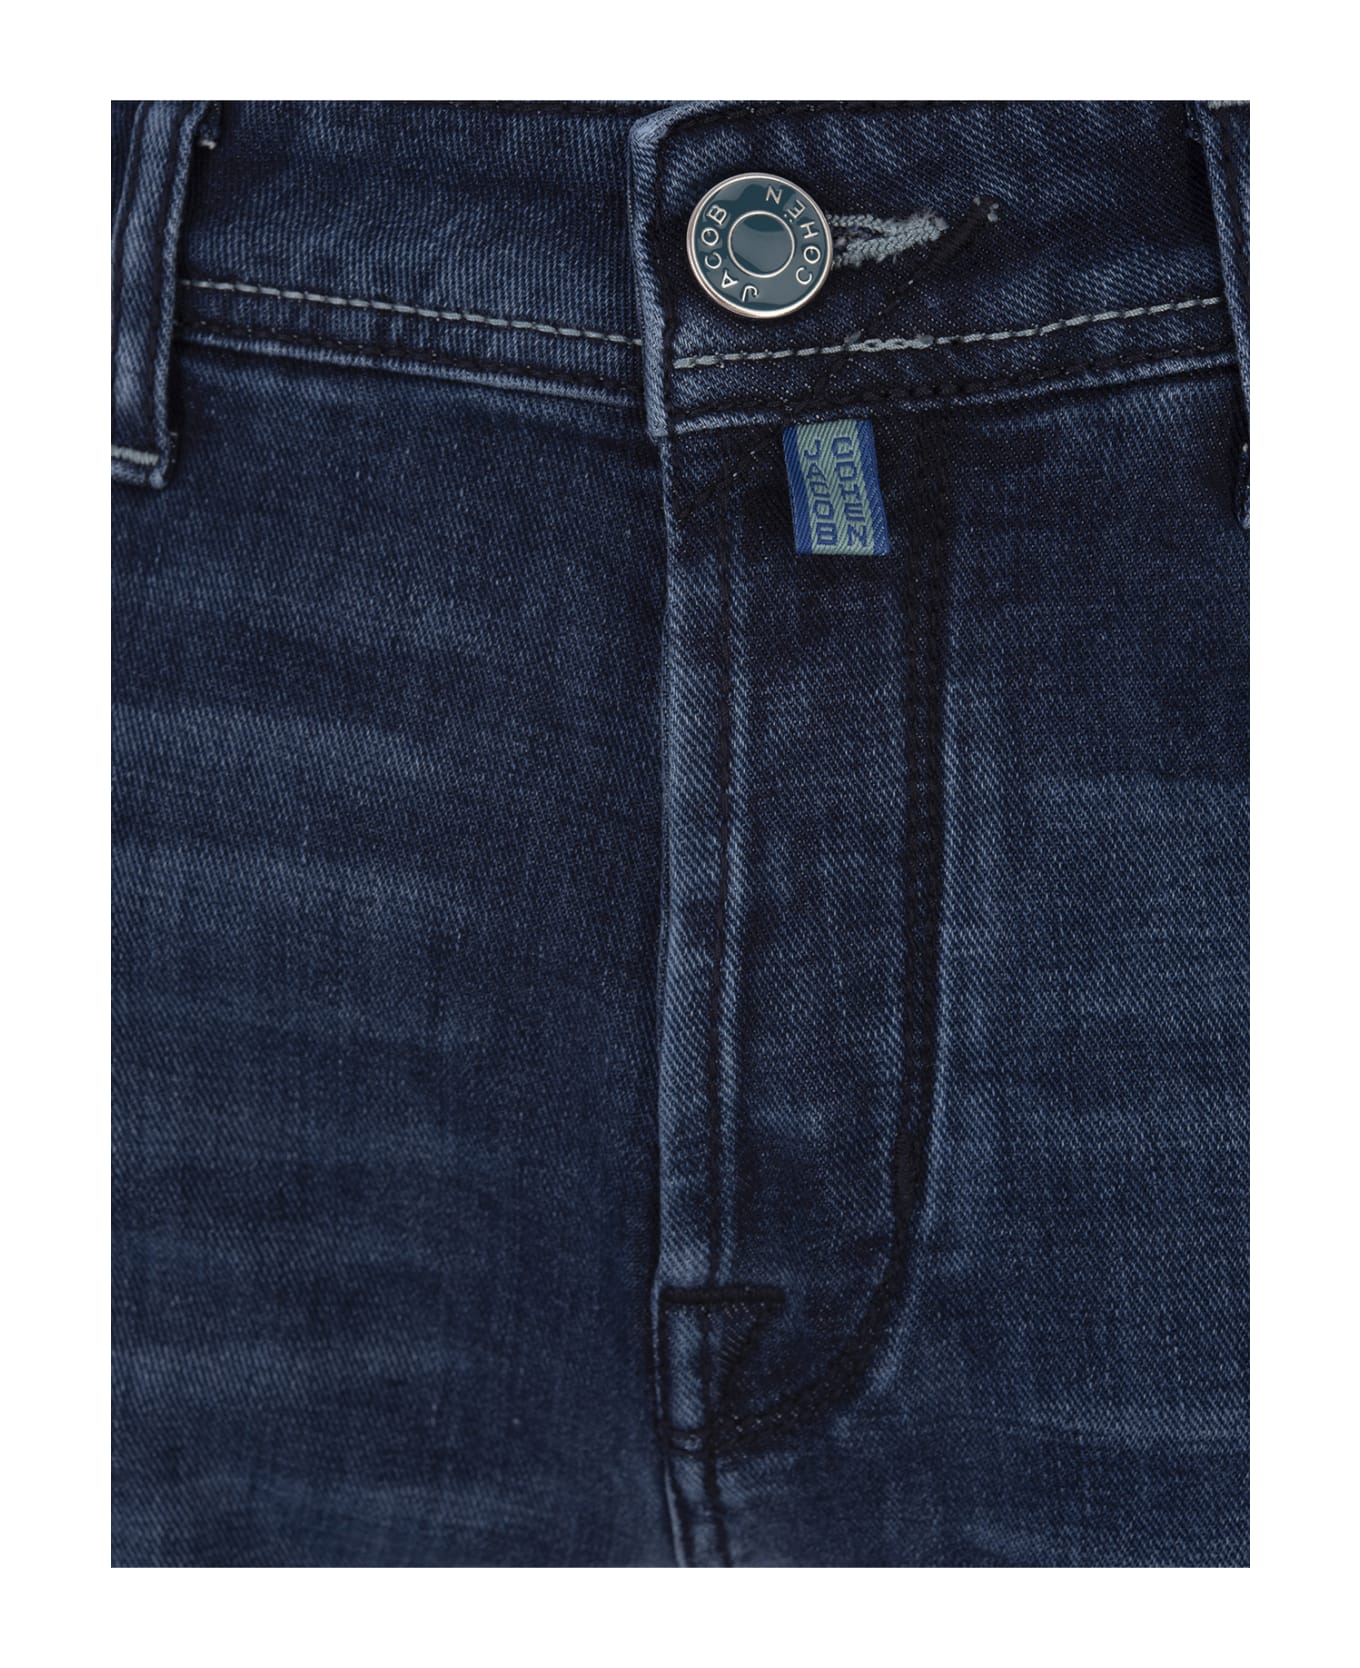 Jacob Cohen Scott Cropped Jeans In Dark Blue Stretch Denim - Blue デニム